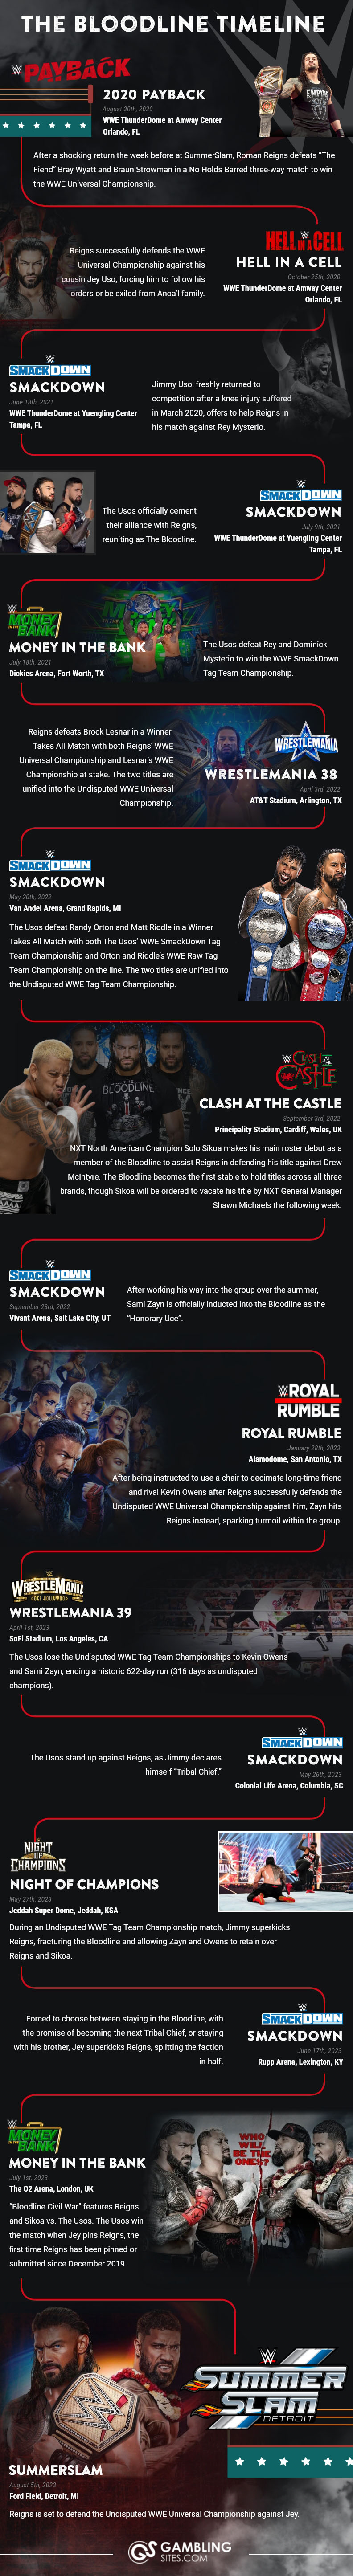 WWE Bloodline Timeline